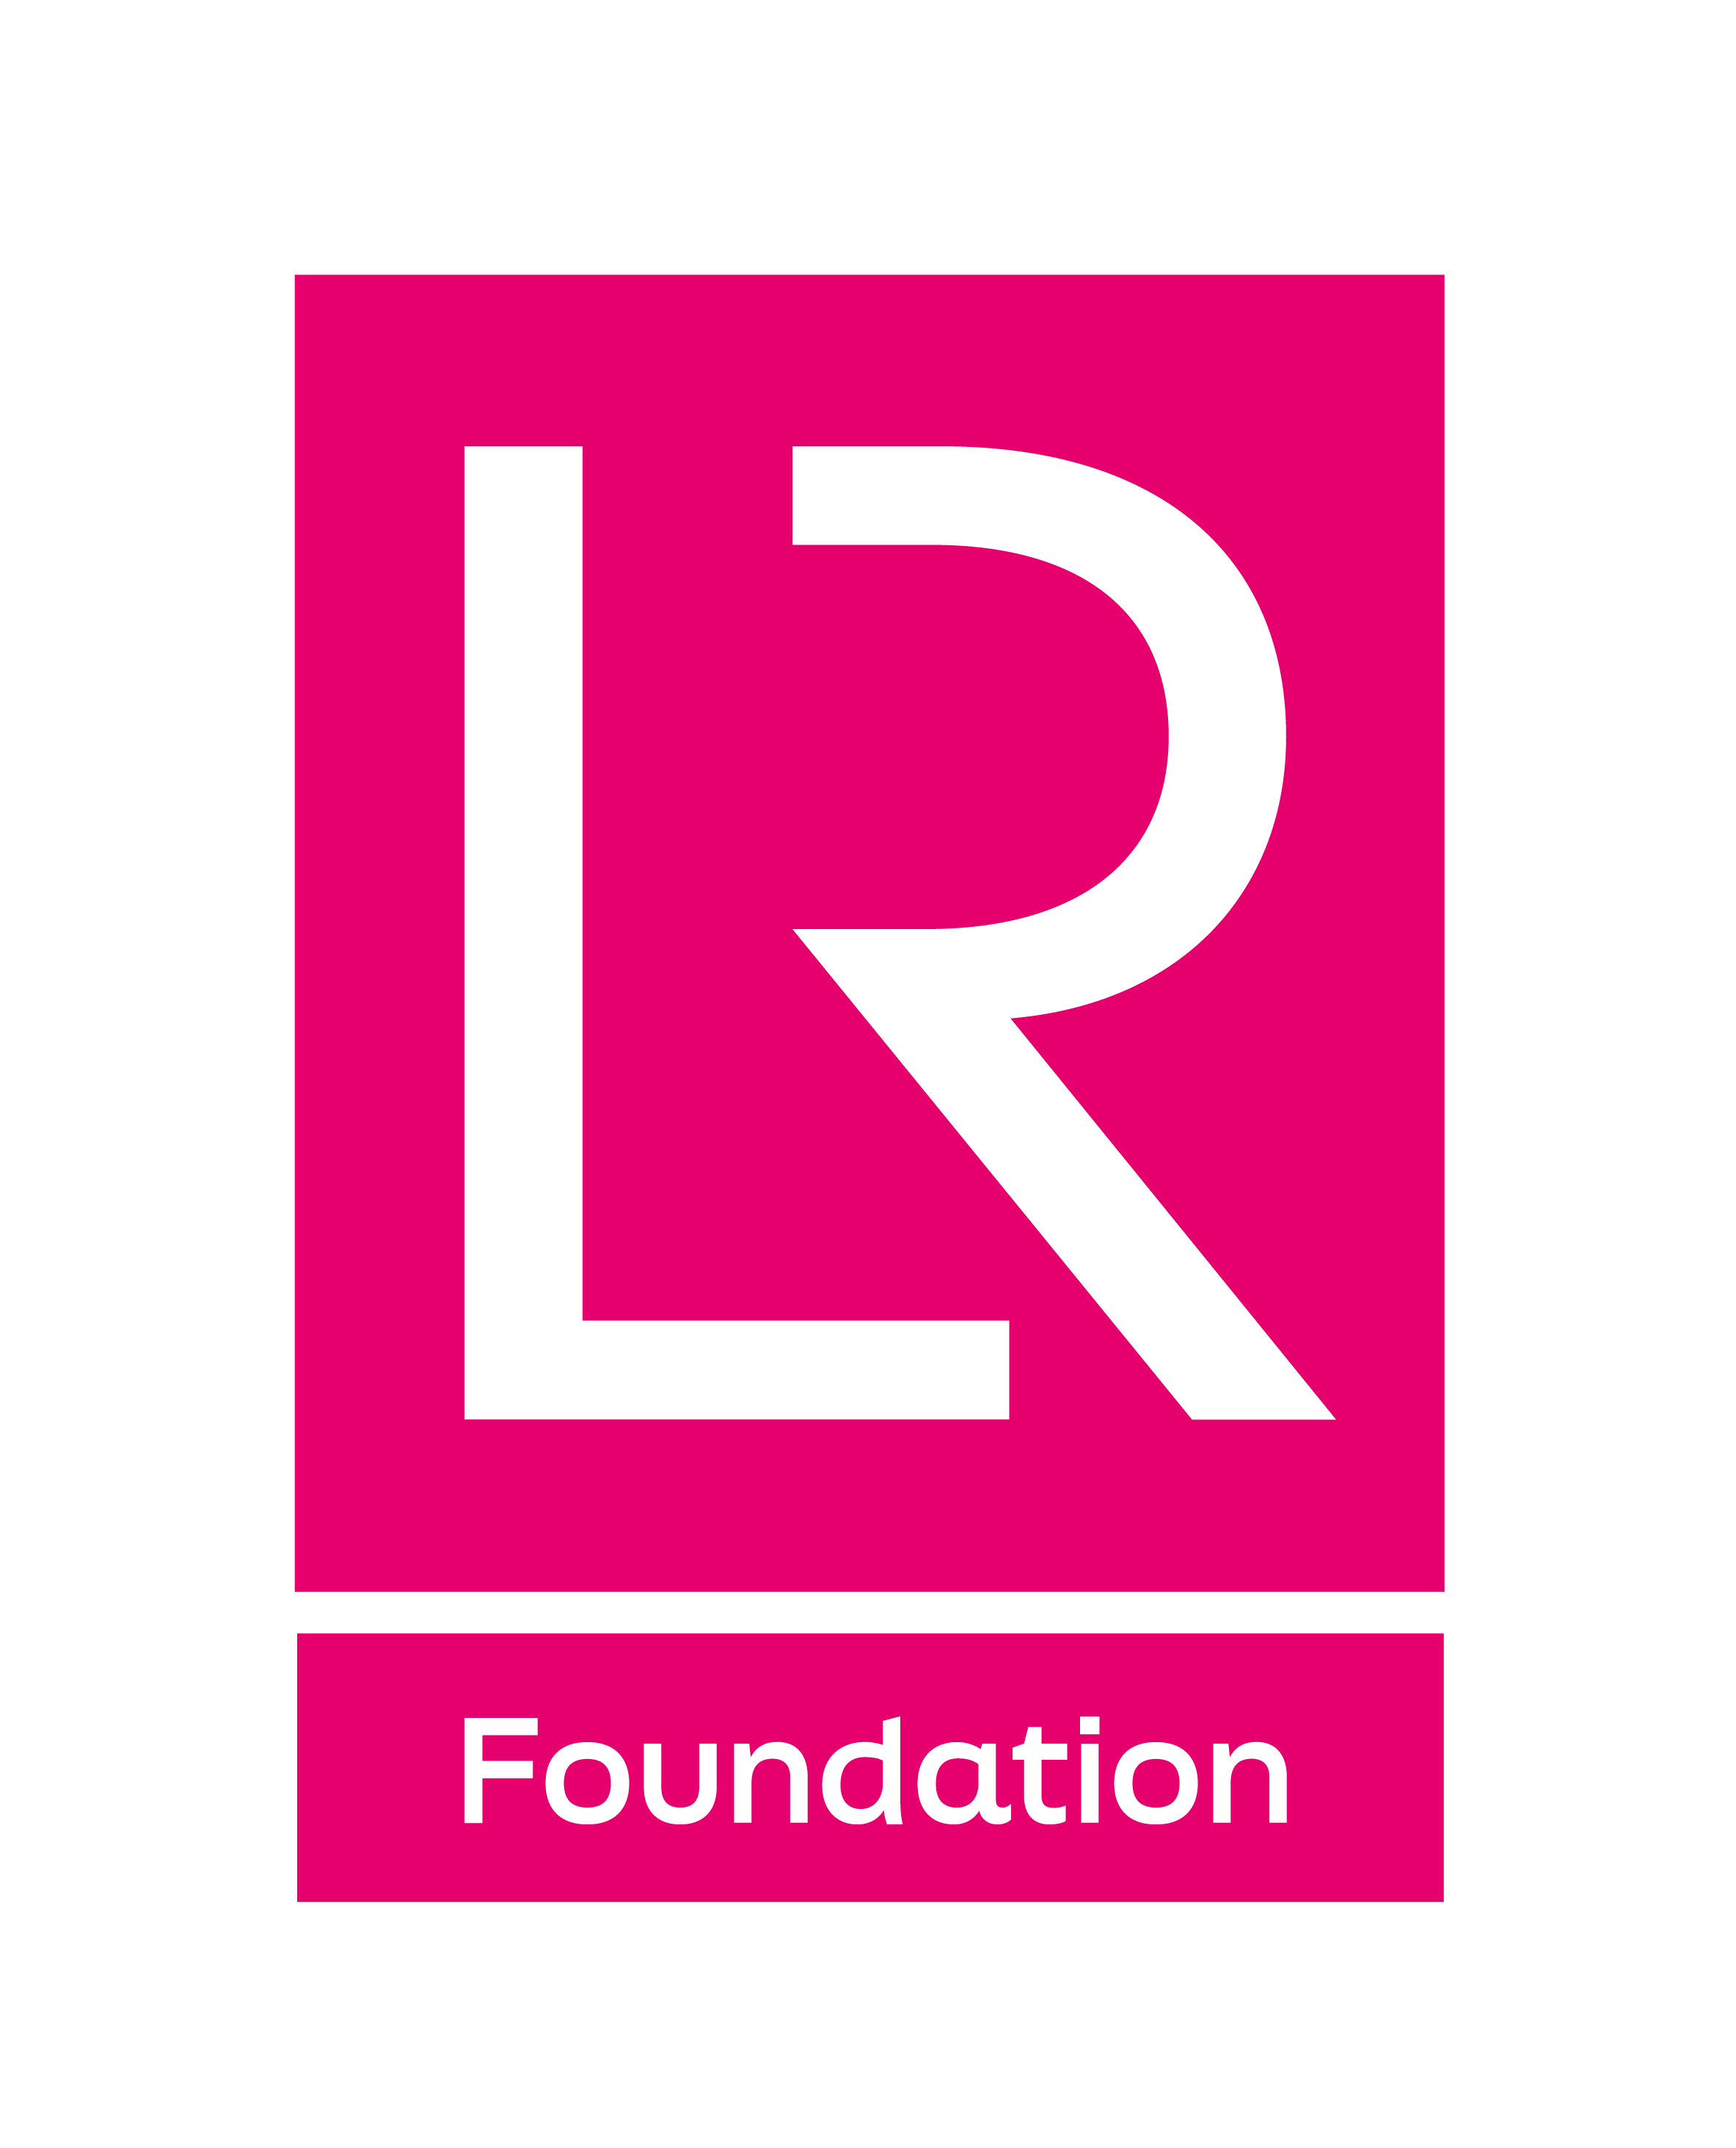 Lloyd's Register Foundation